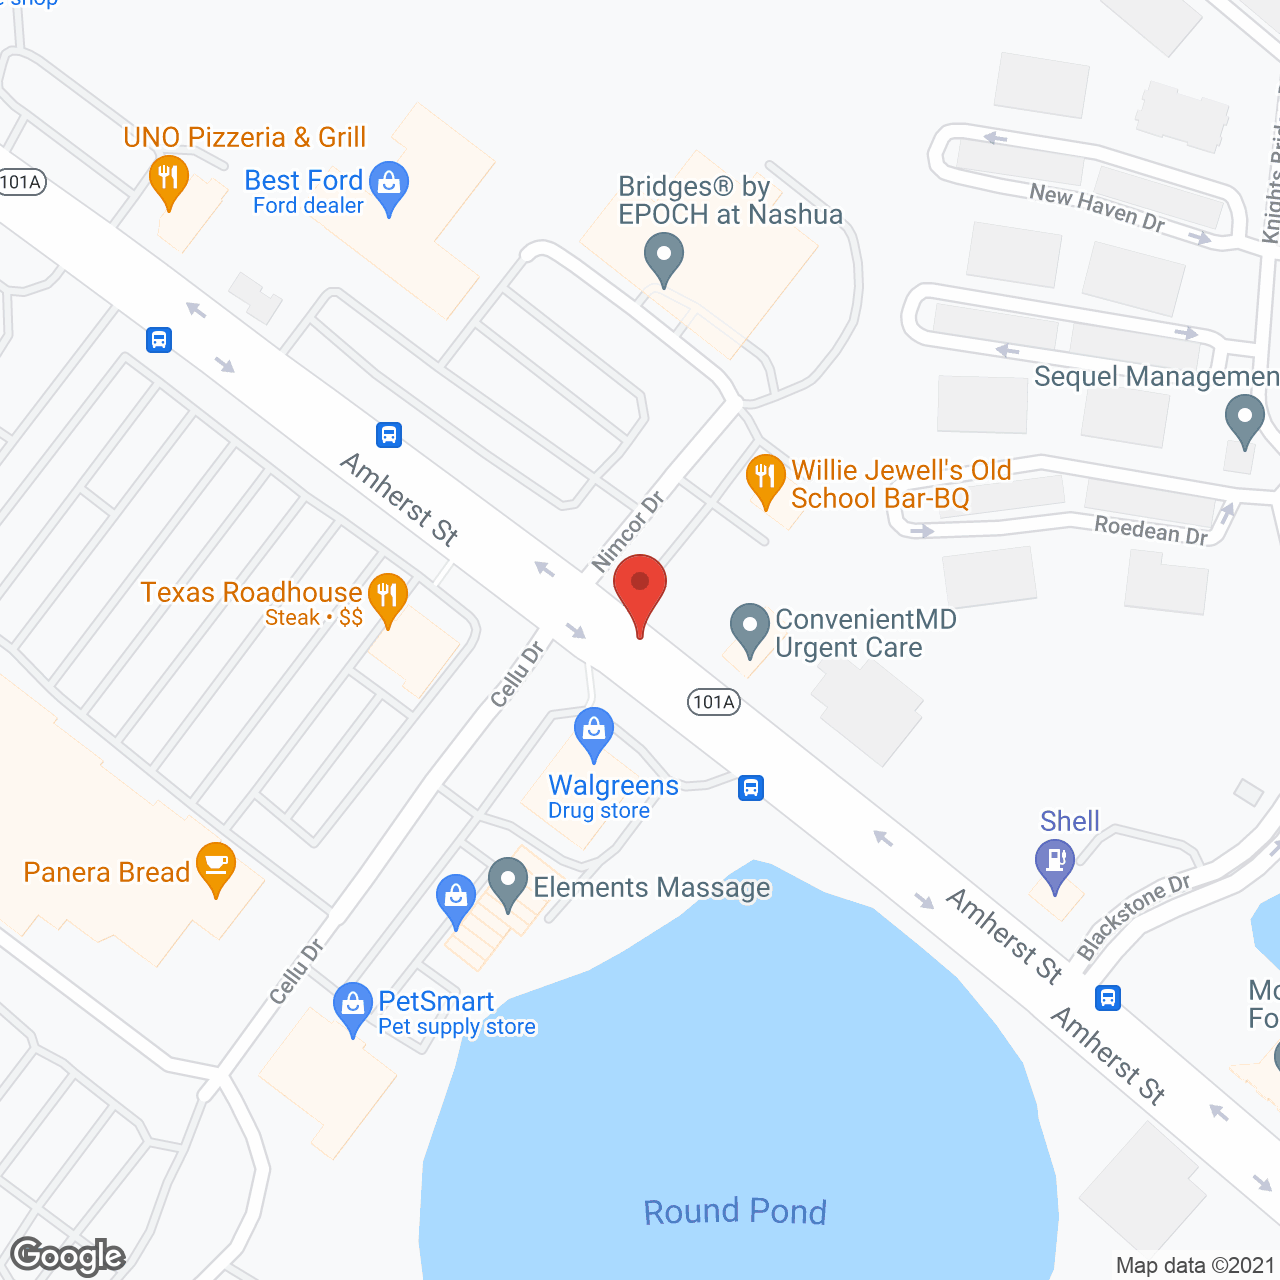 Bridges by EPOCH at Nashua in google map